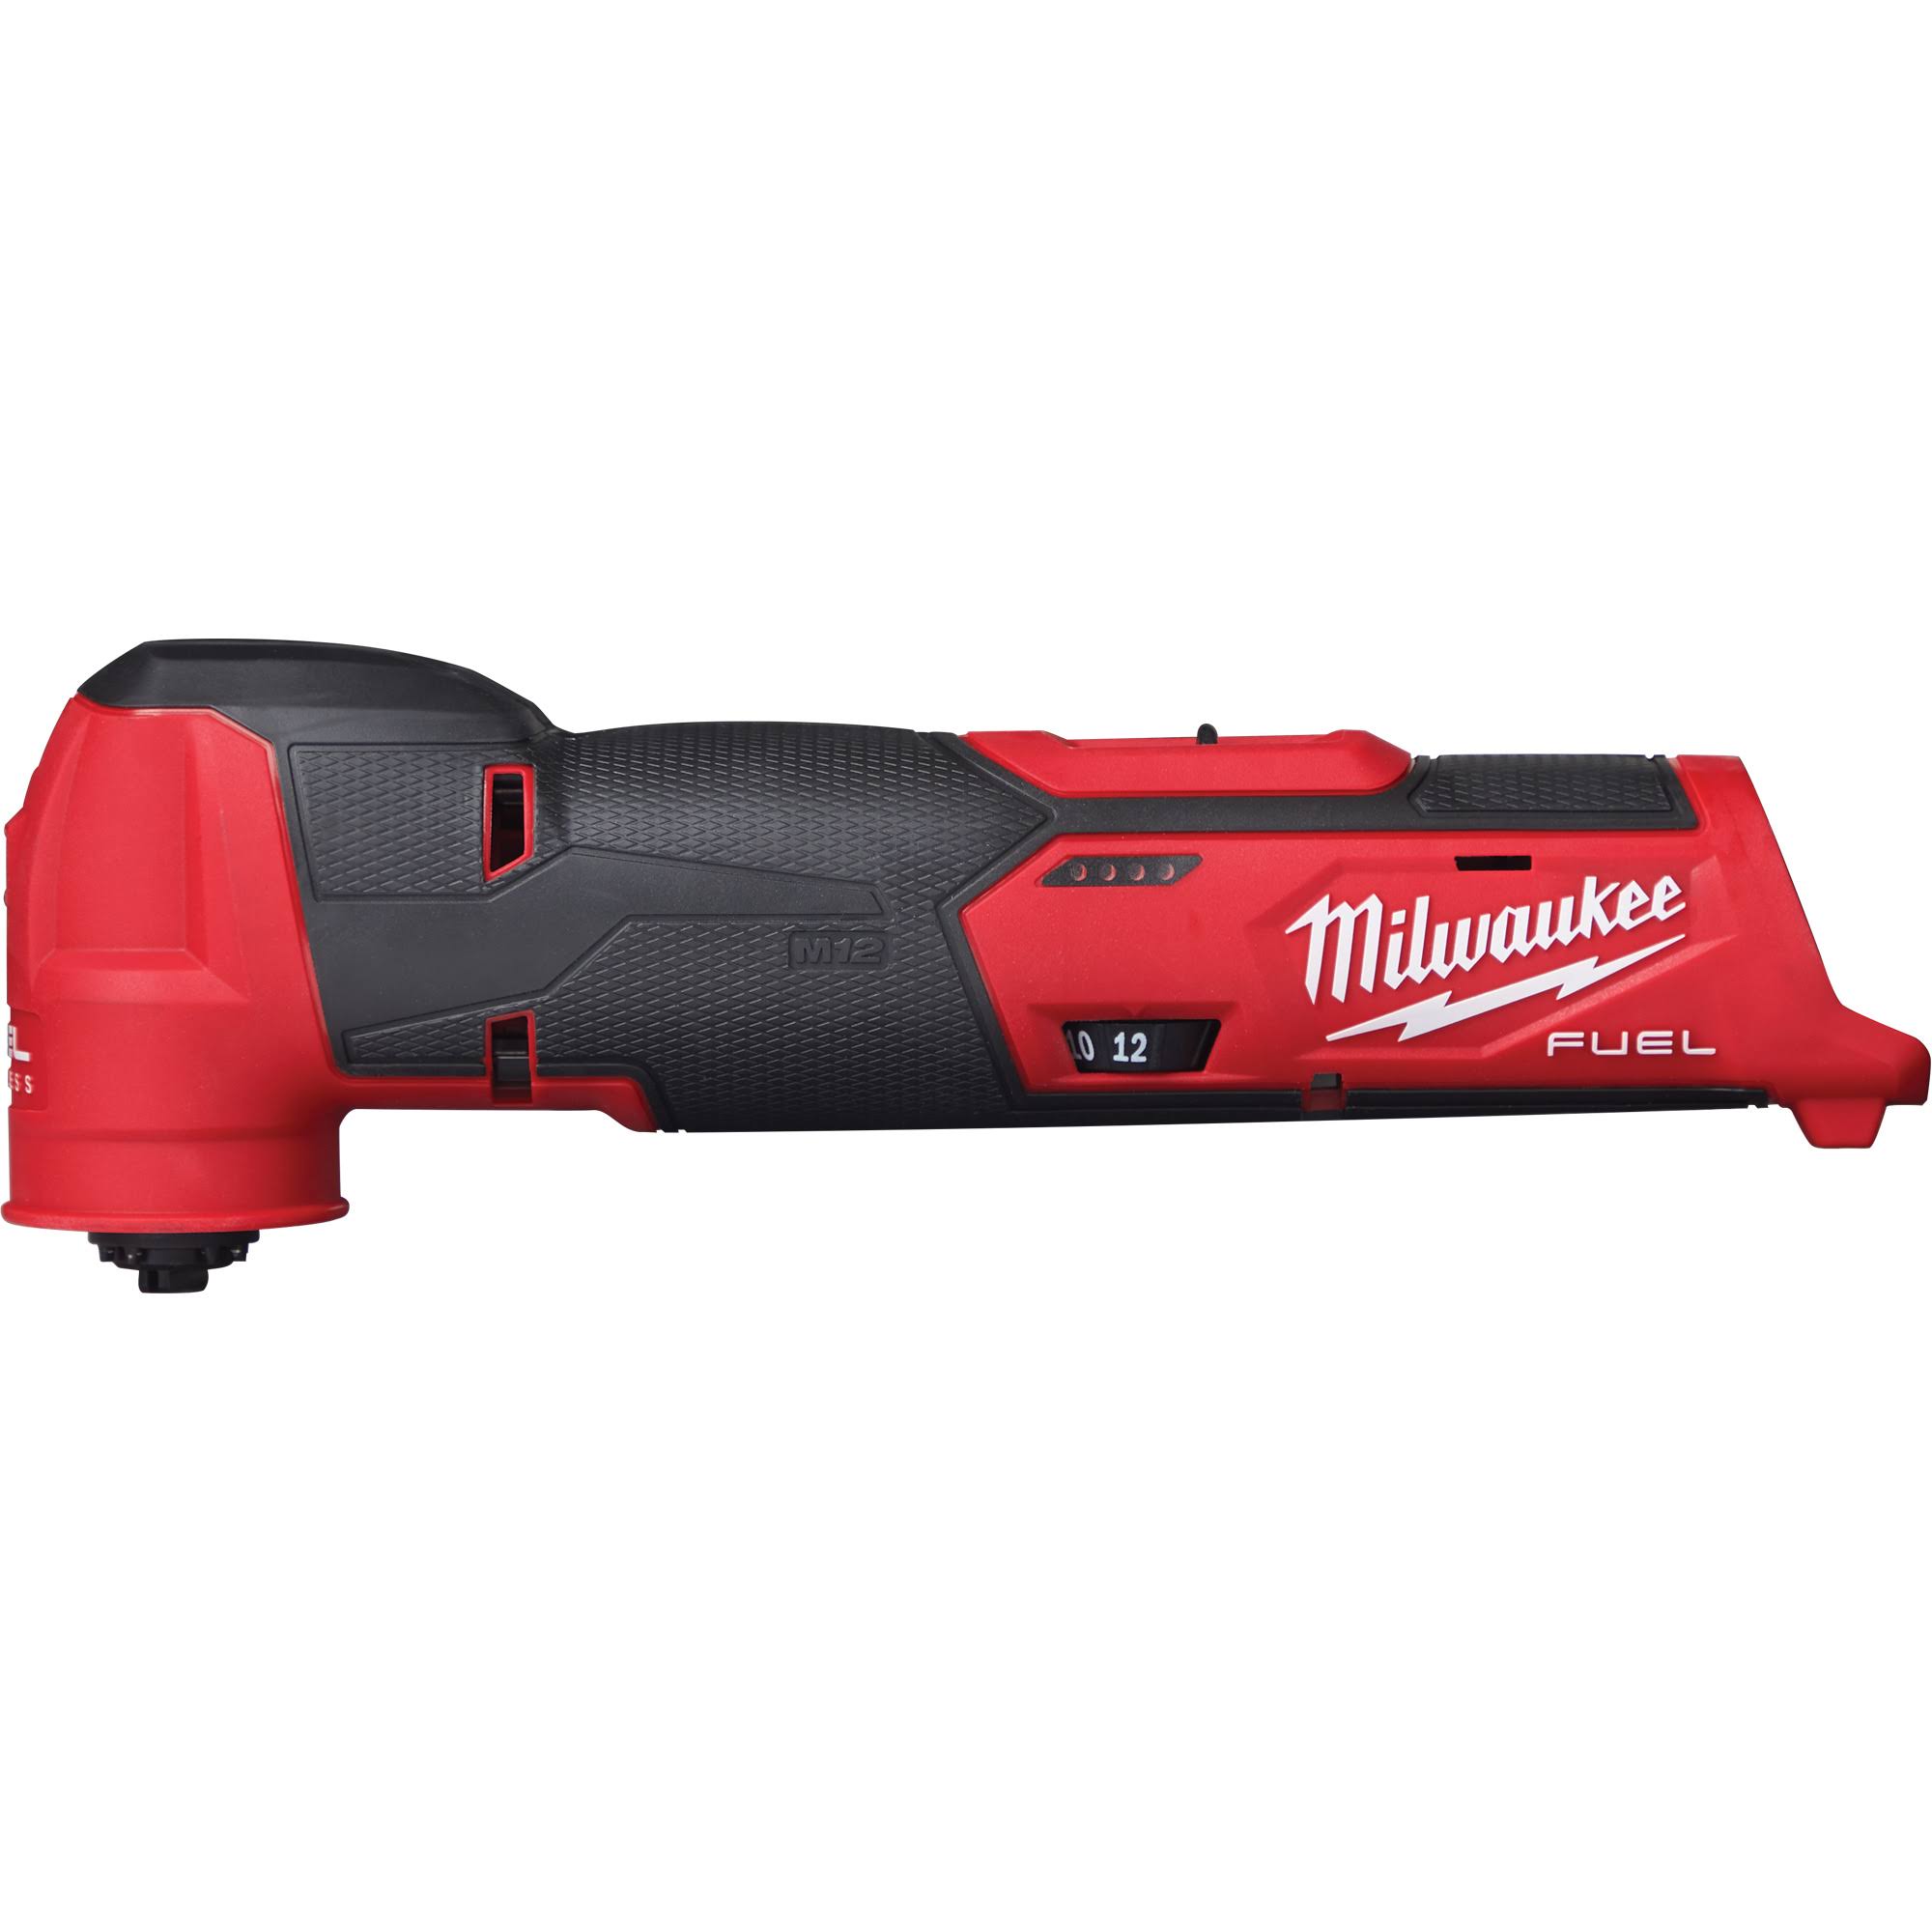 Milwaukee 2526-20 M12 FUEL Oscillating Multi-Tool - Tool Only